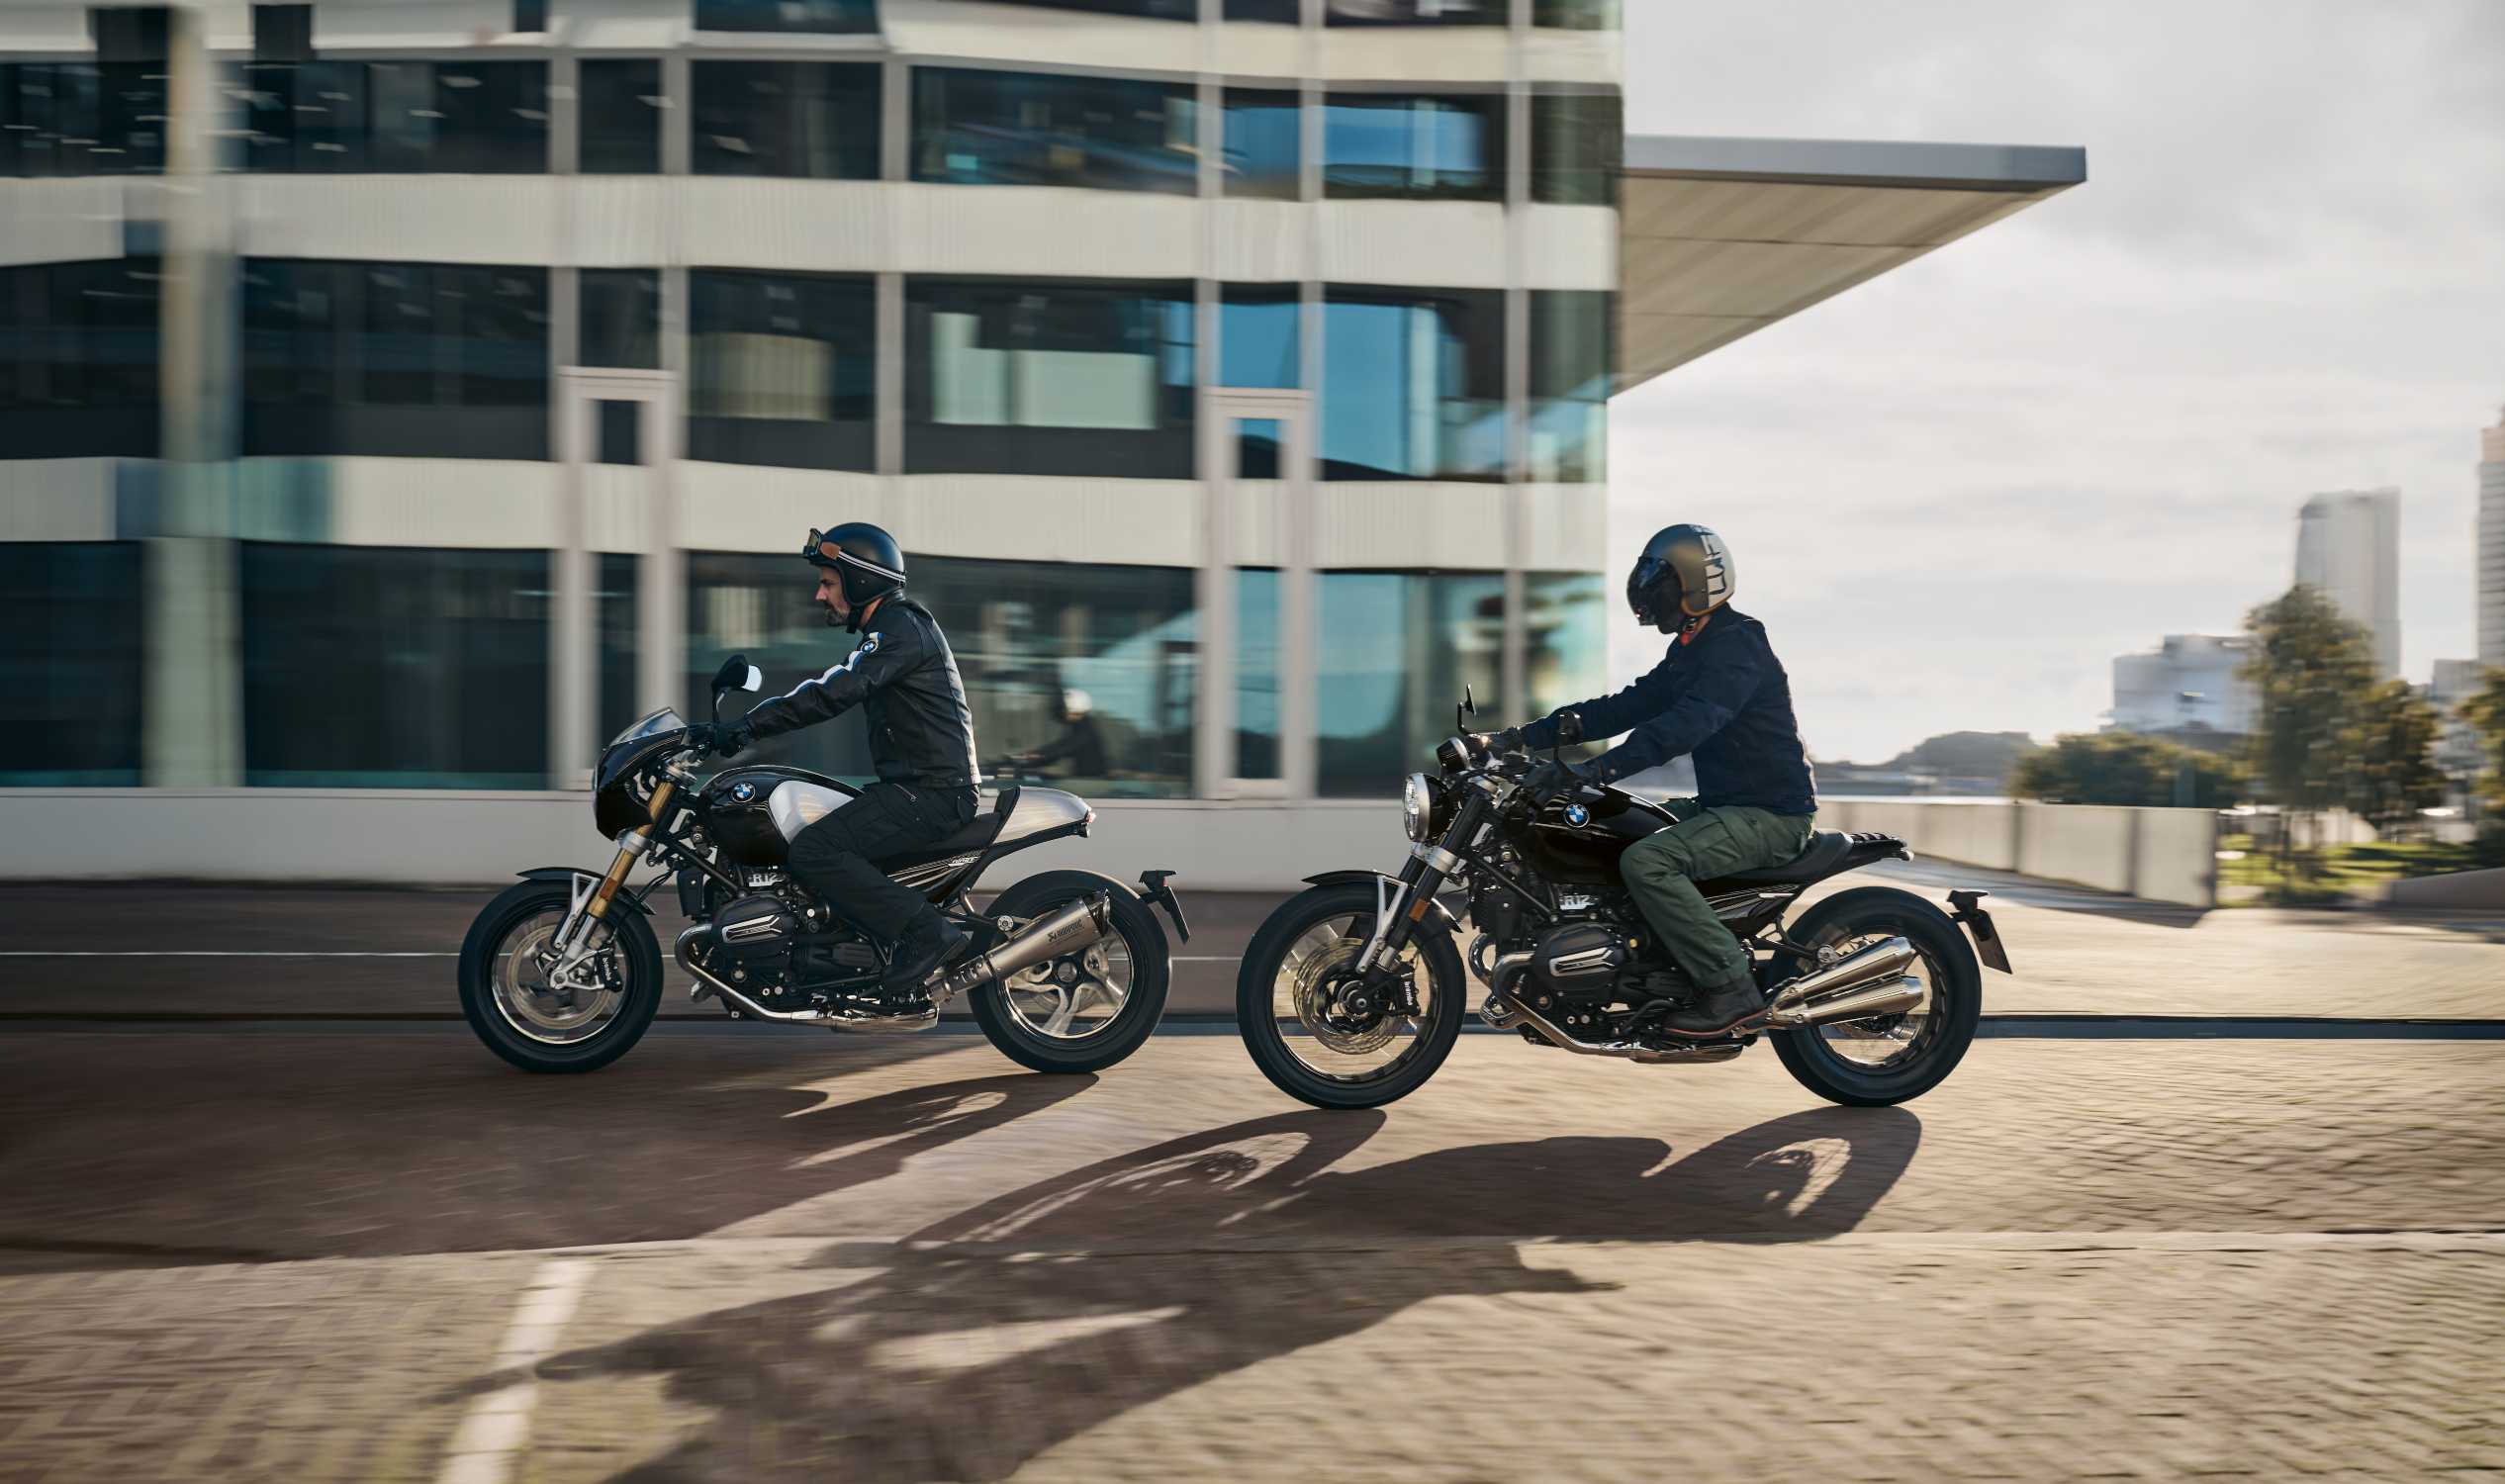 BMW lanzó anteojos inteligentes para motociclistas con realidad aumentada